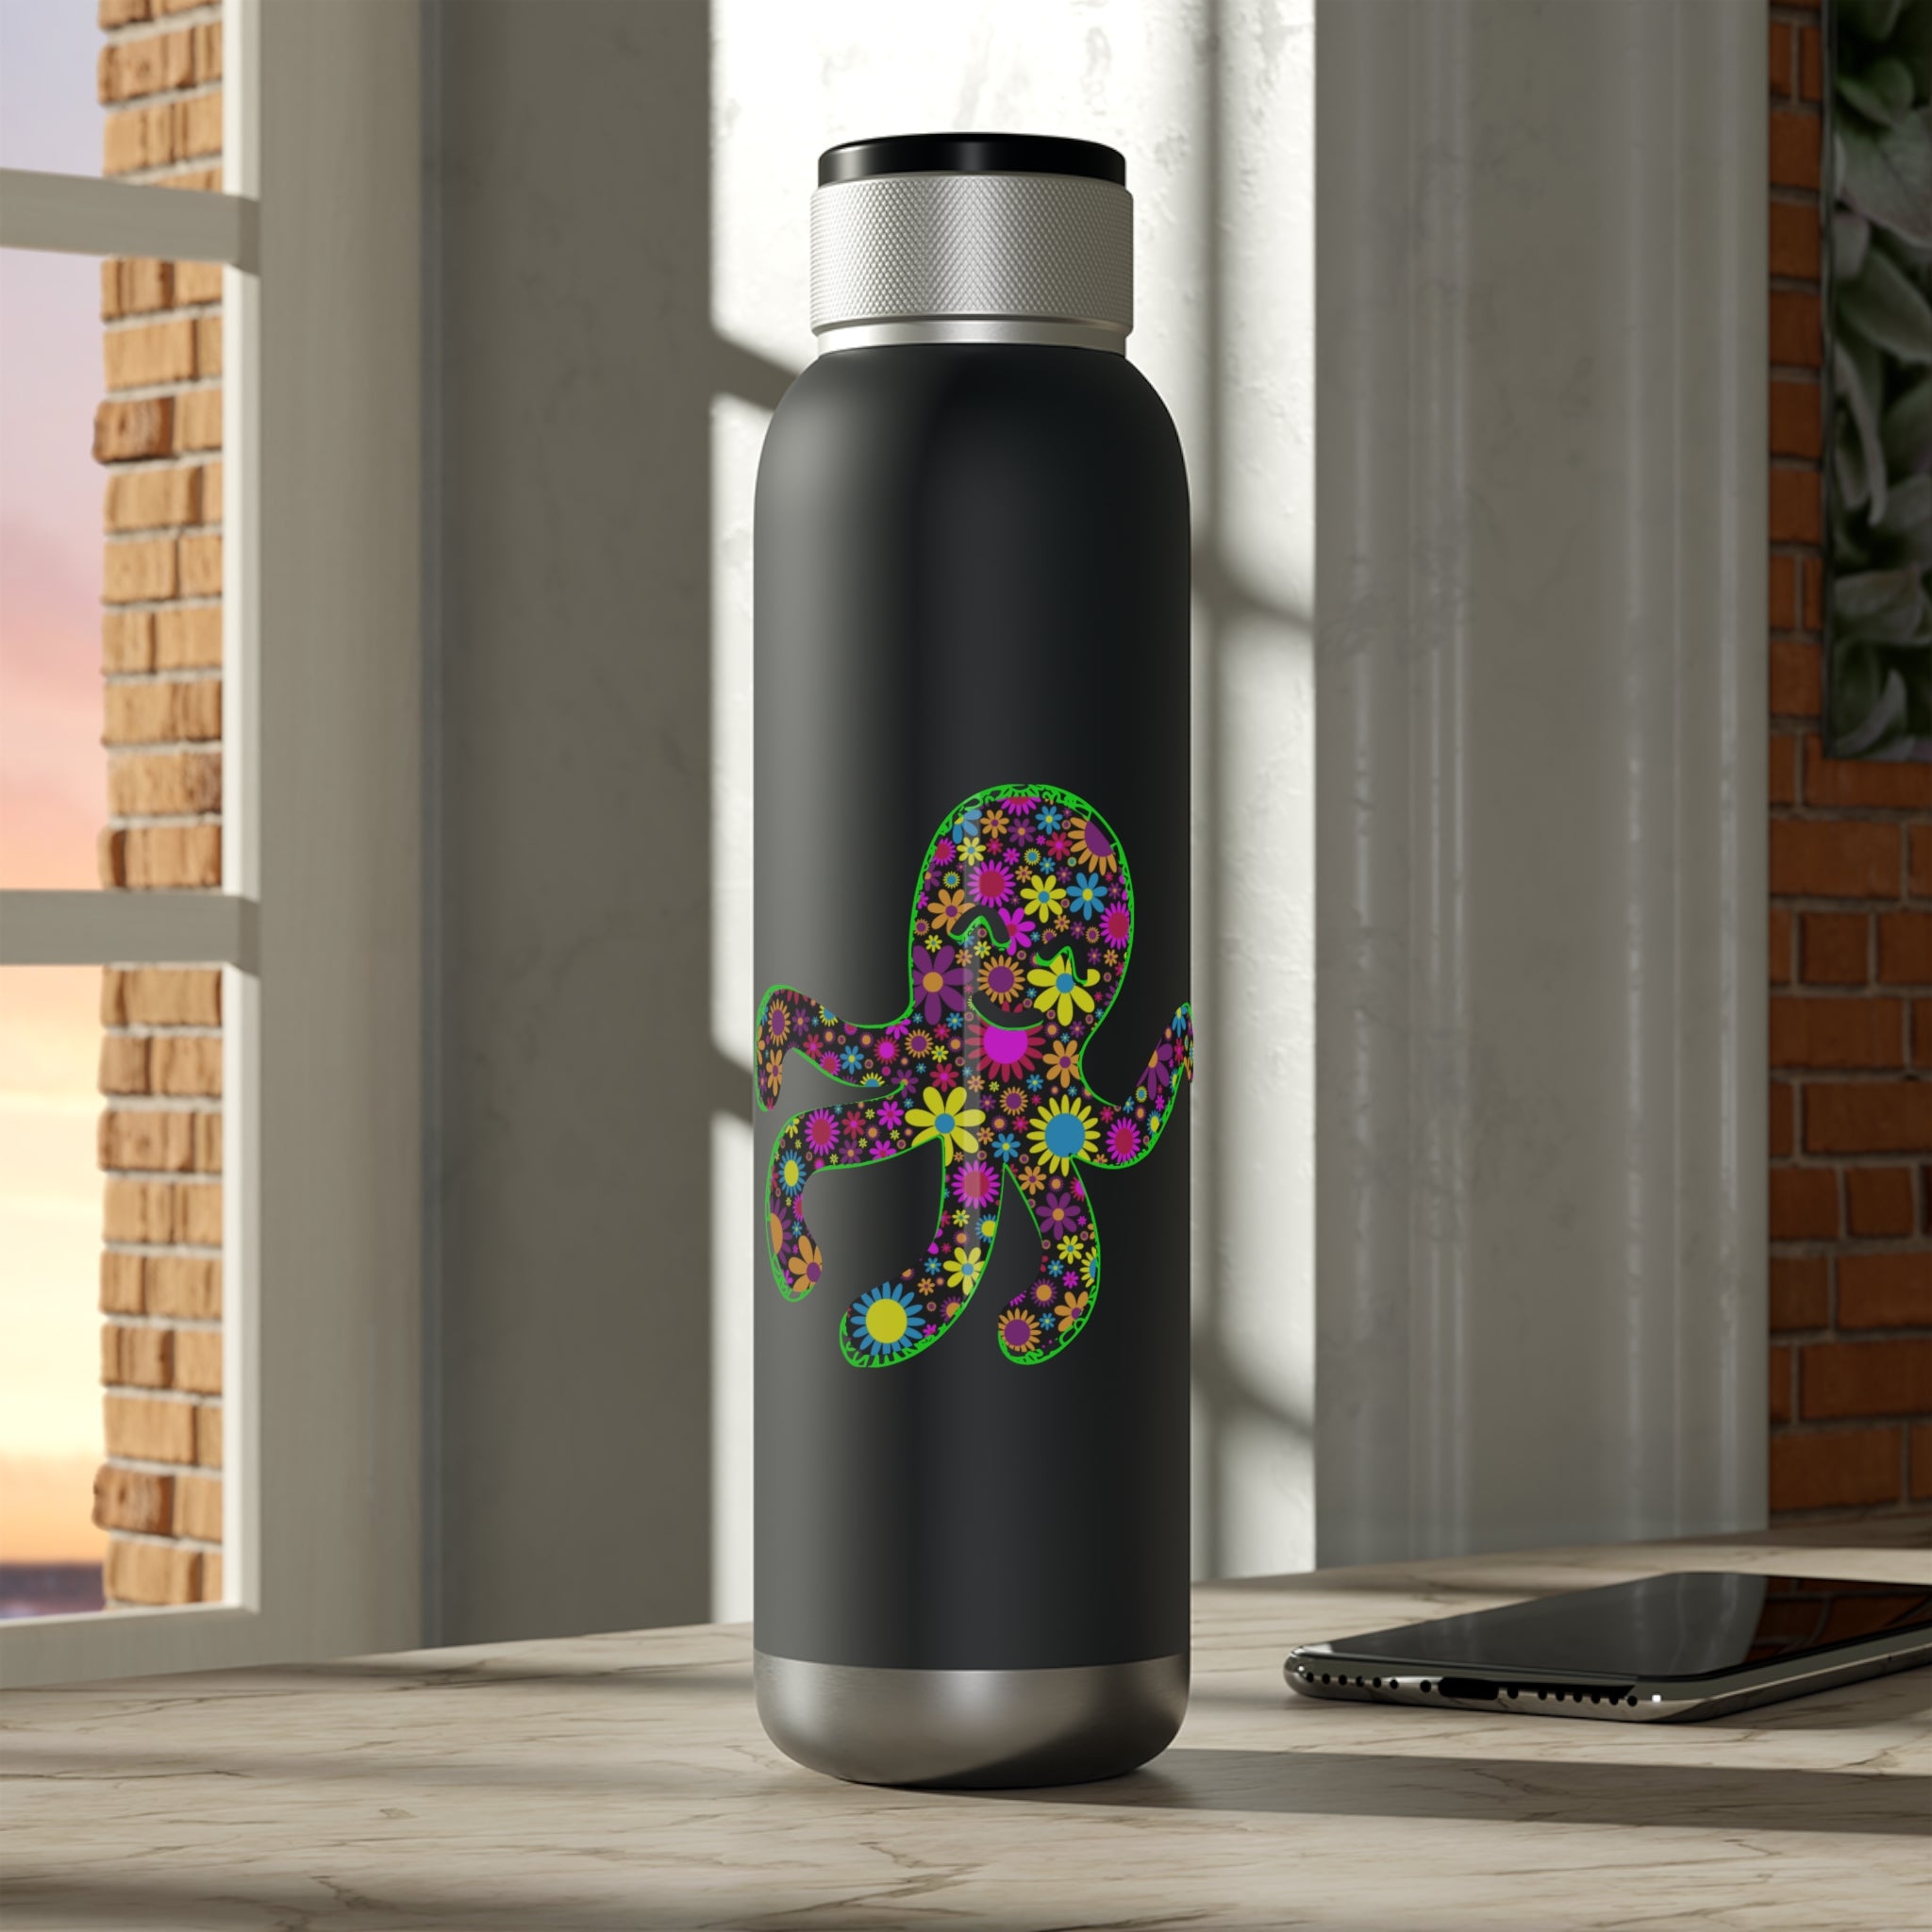 Soundwave Copper Vacuum Waterproof Audio Bottle 22oz - Floral Octopus, 2 in 1 Water Bottle, Bluetooth Speaker Bottle, Black Portable